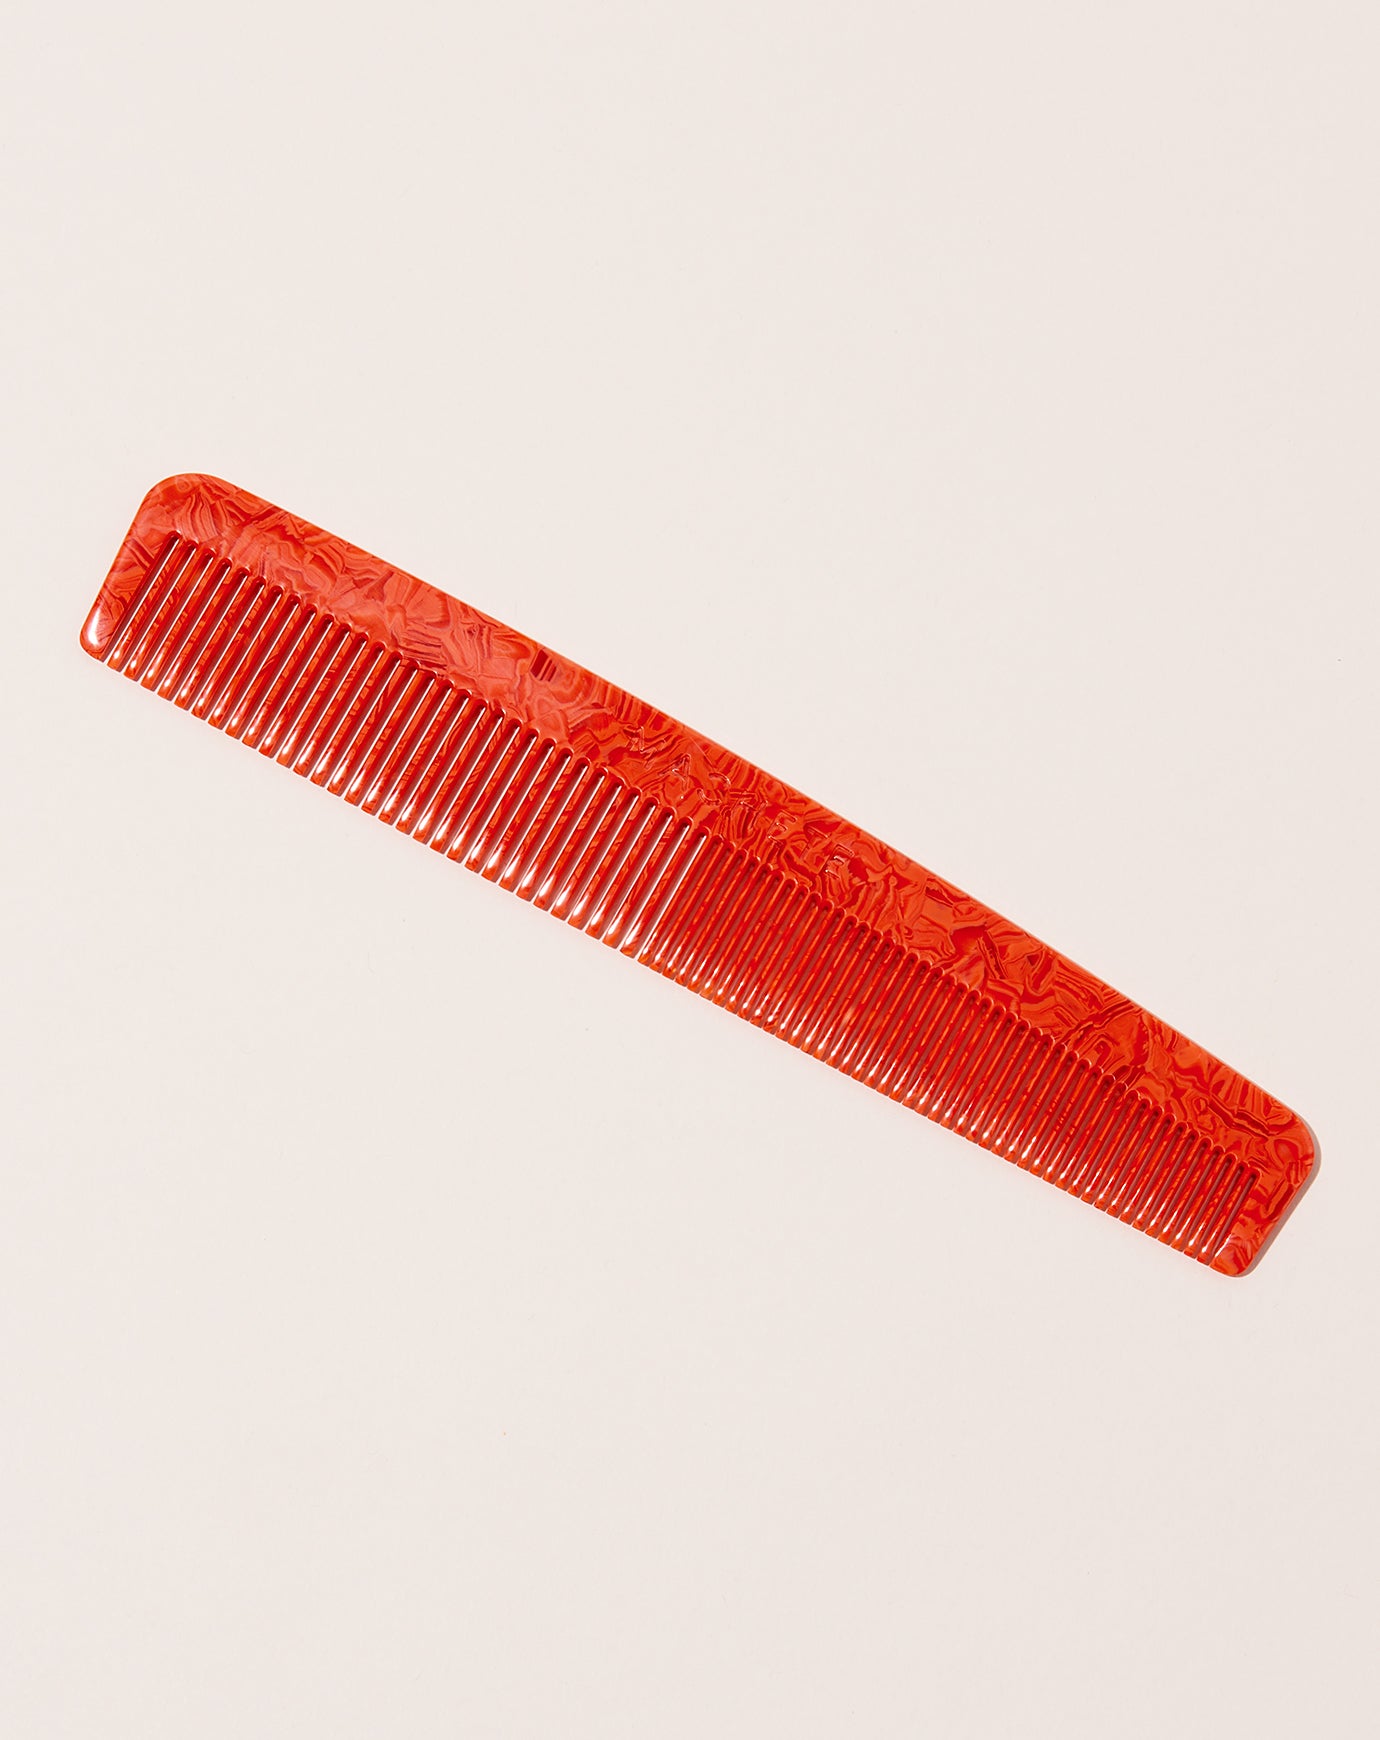 Machete No. 1 Comb in Poppy